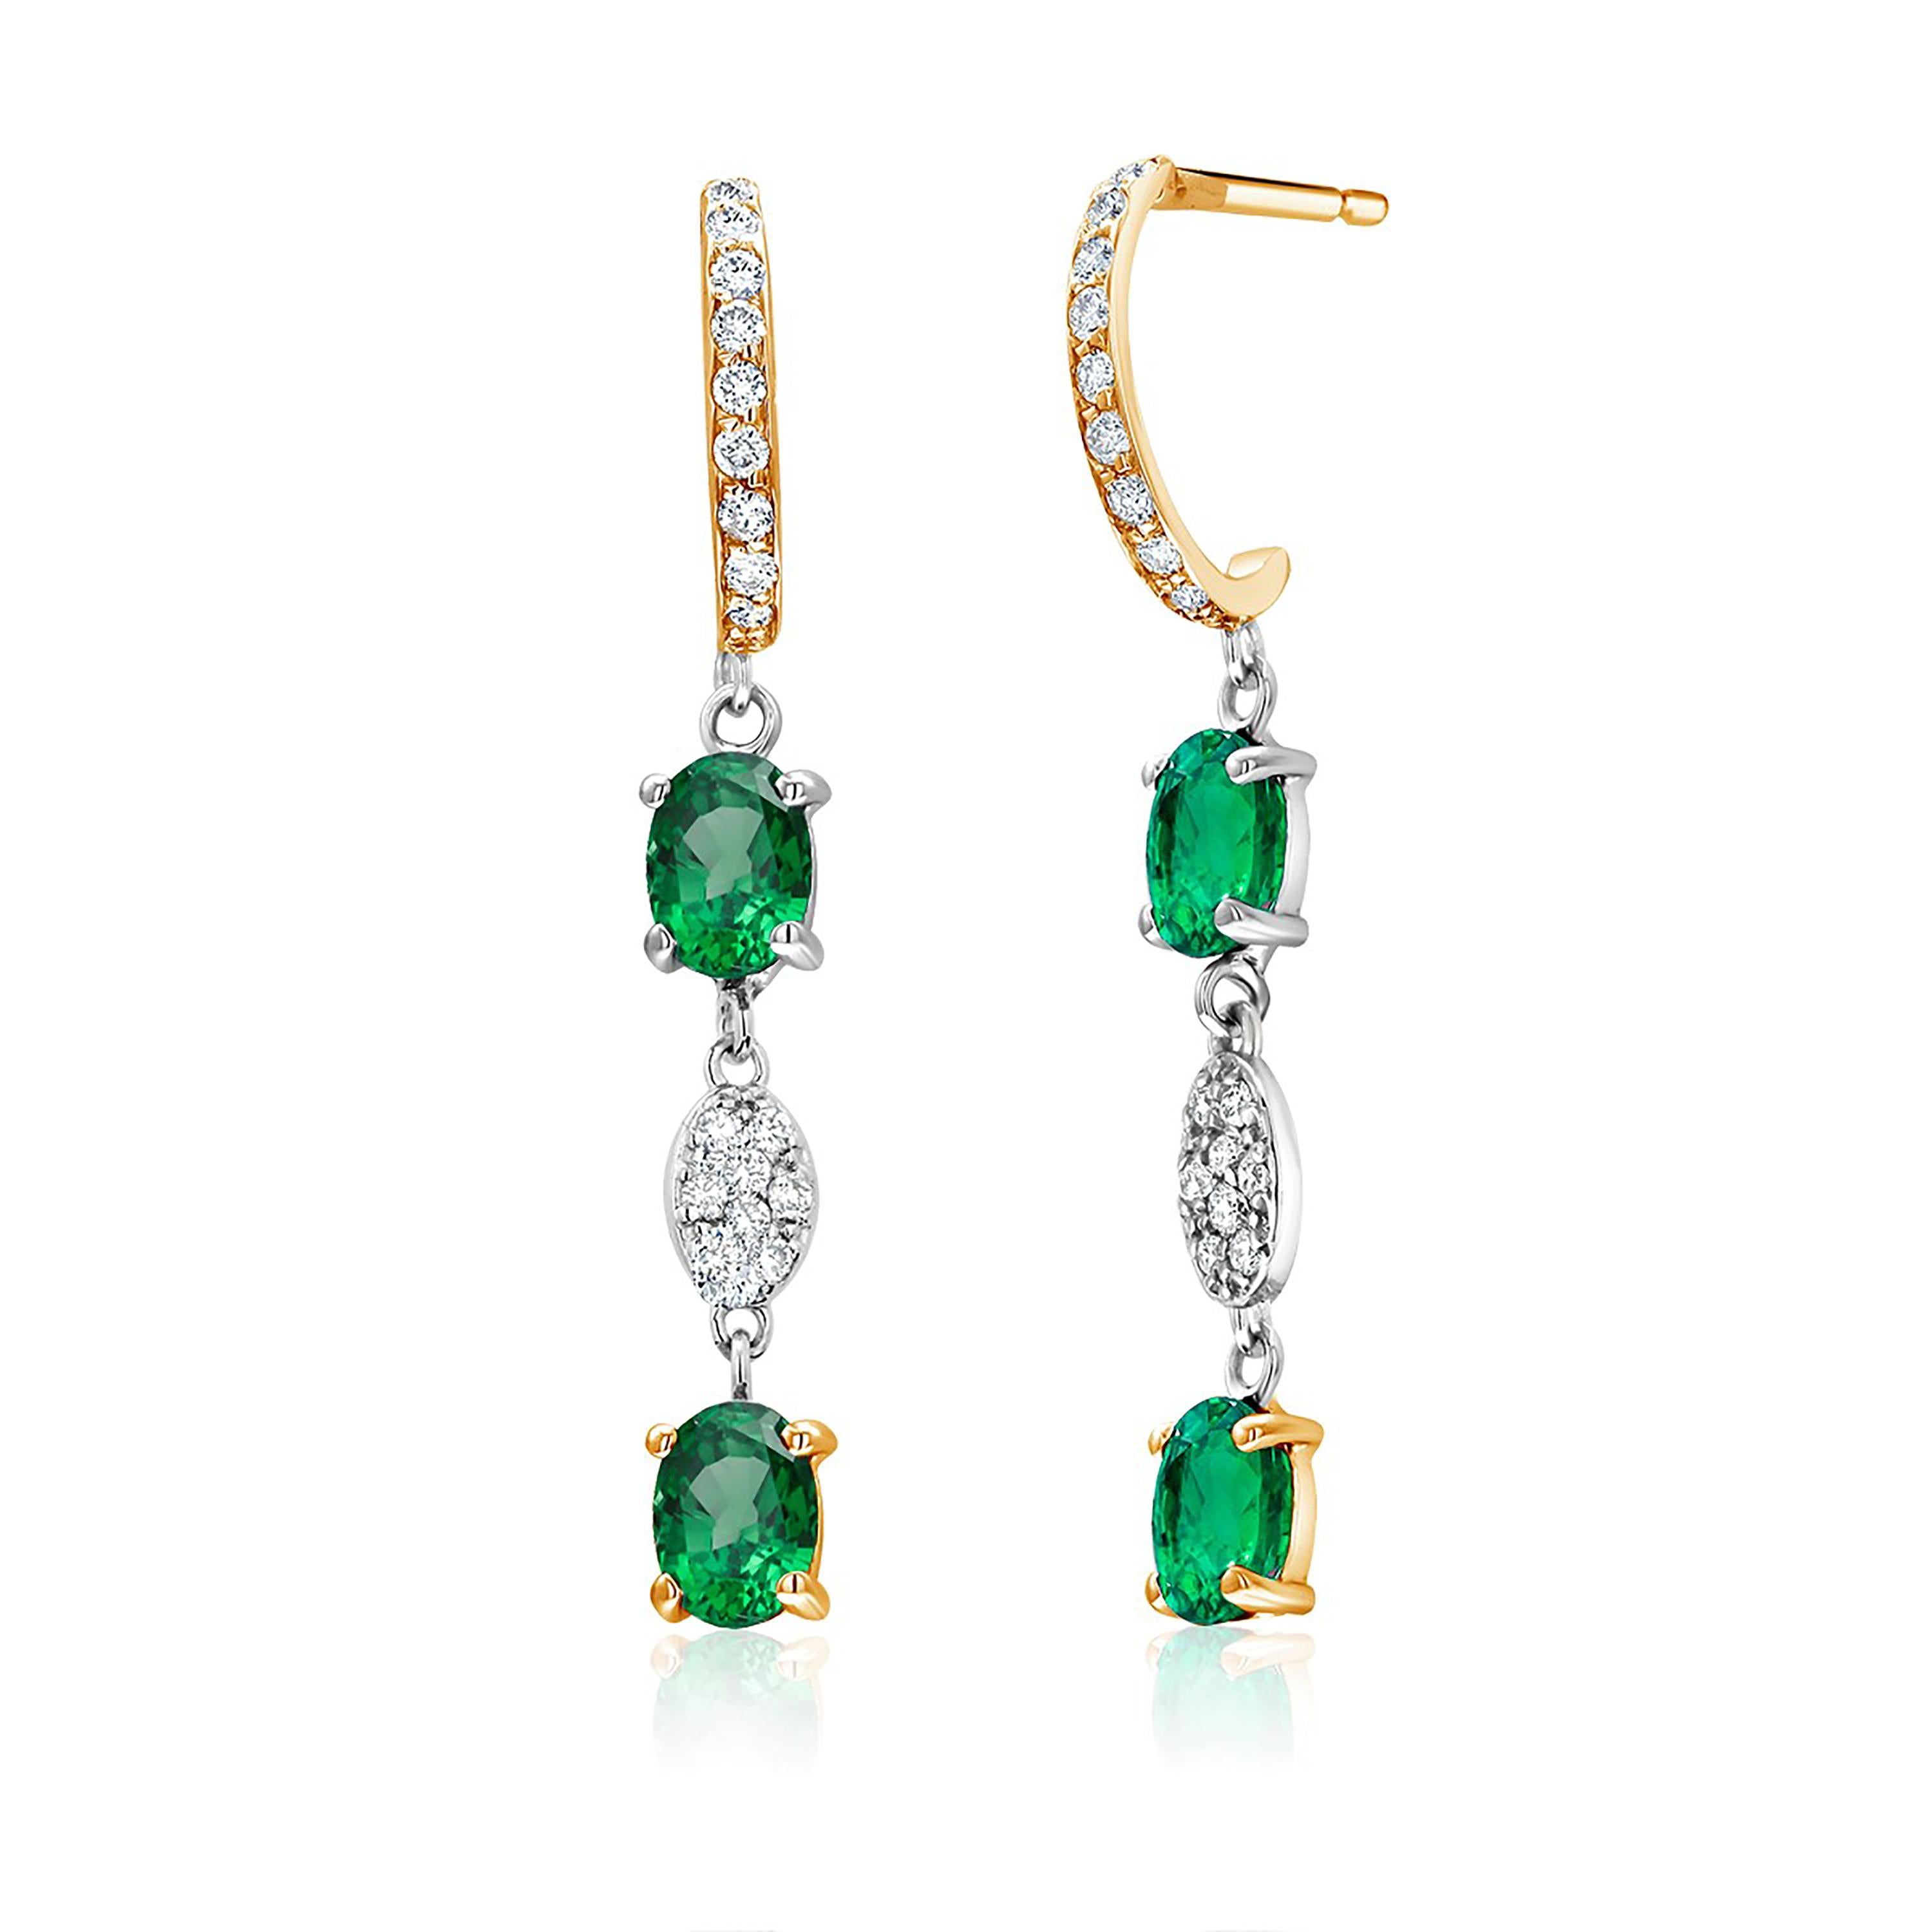 Oval Cut Emerald and Diamond Hoop Drop Gold Earrings Weighing 2.57 Carat